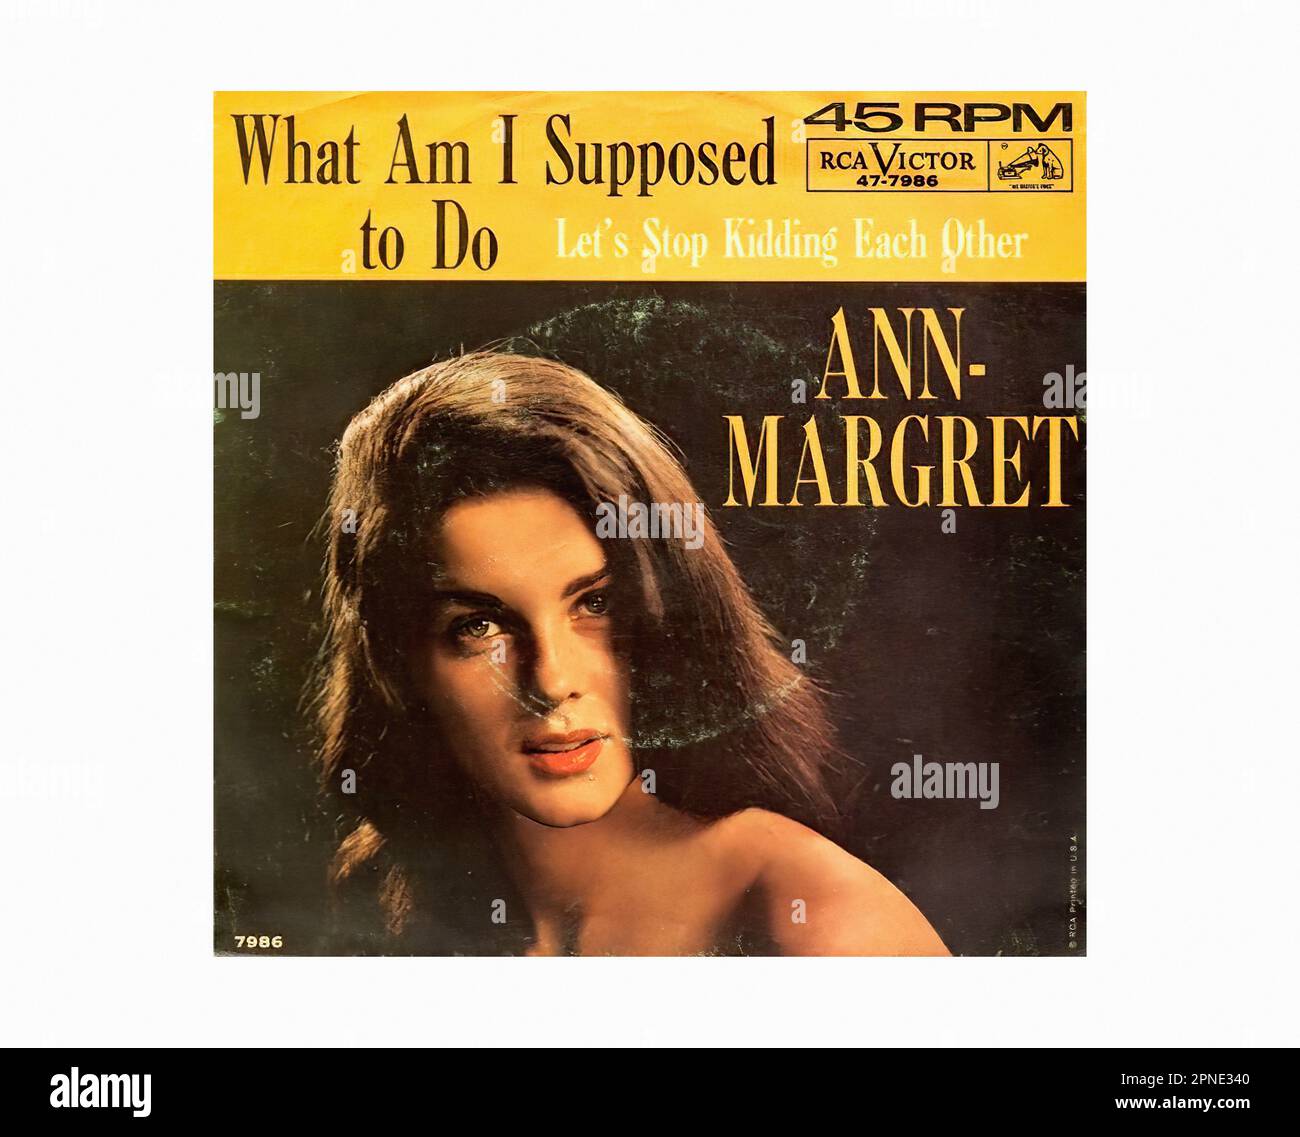 Ann-Margret 1962 02 - Vintage 45 R.P.M Music Vinyl Record Stock Photo